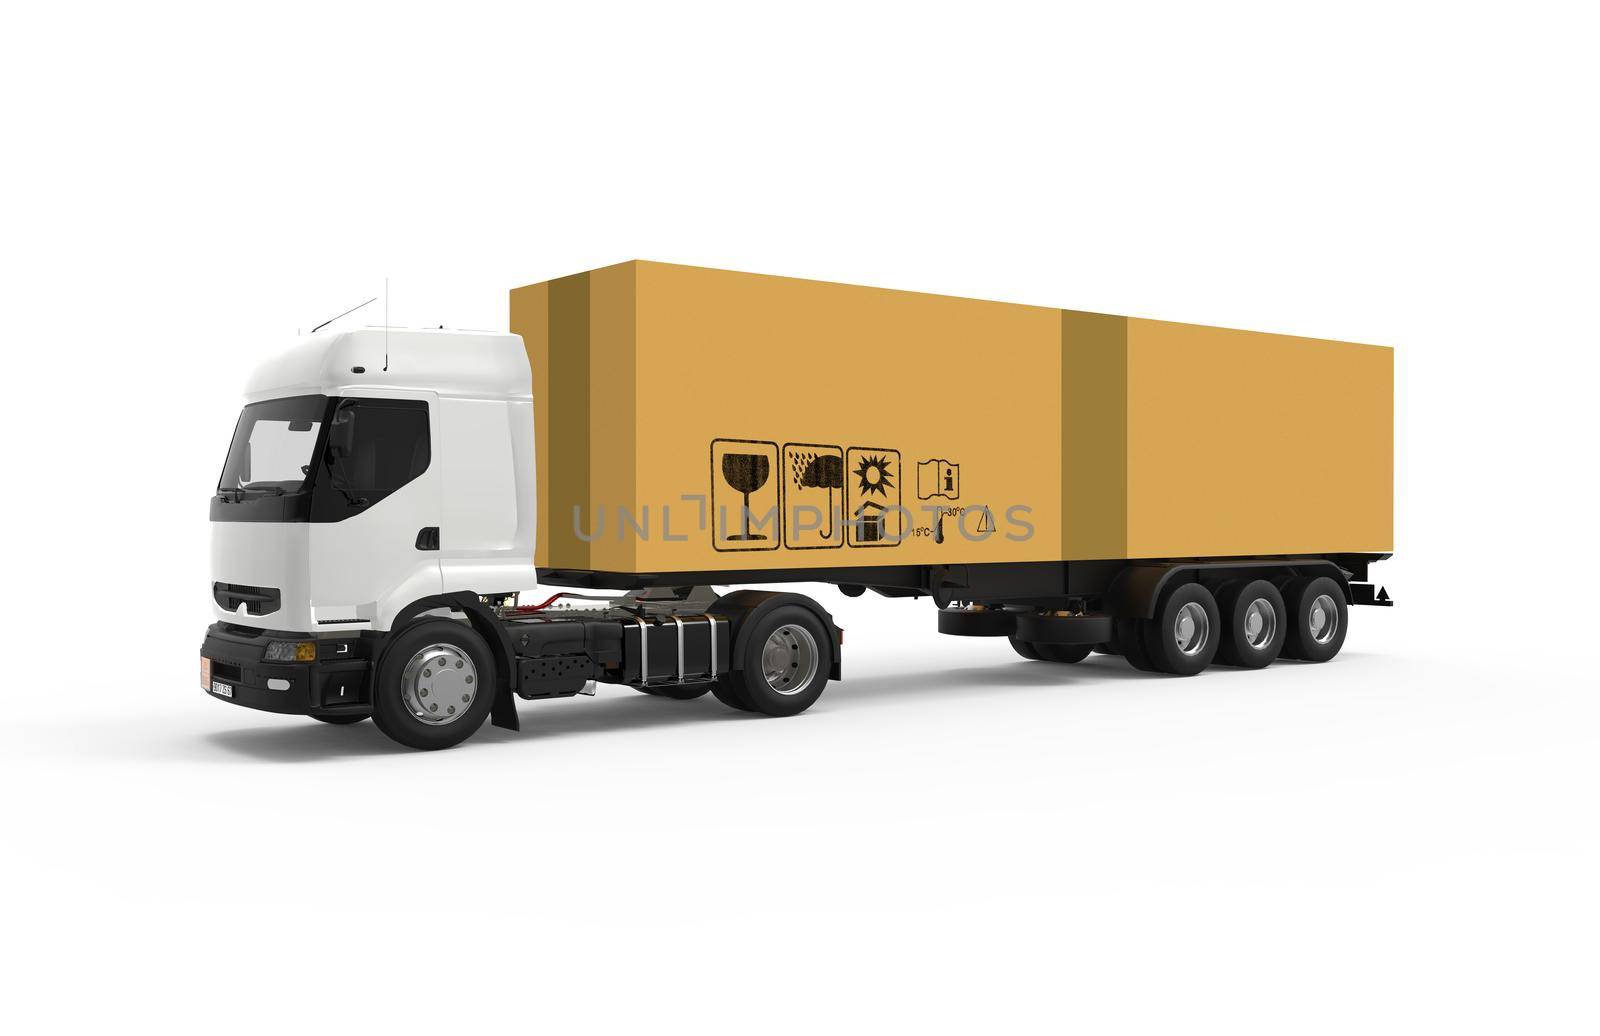 Truck with big cardboard box by cla78